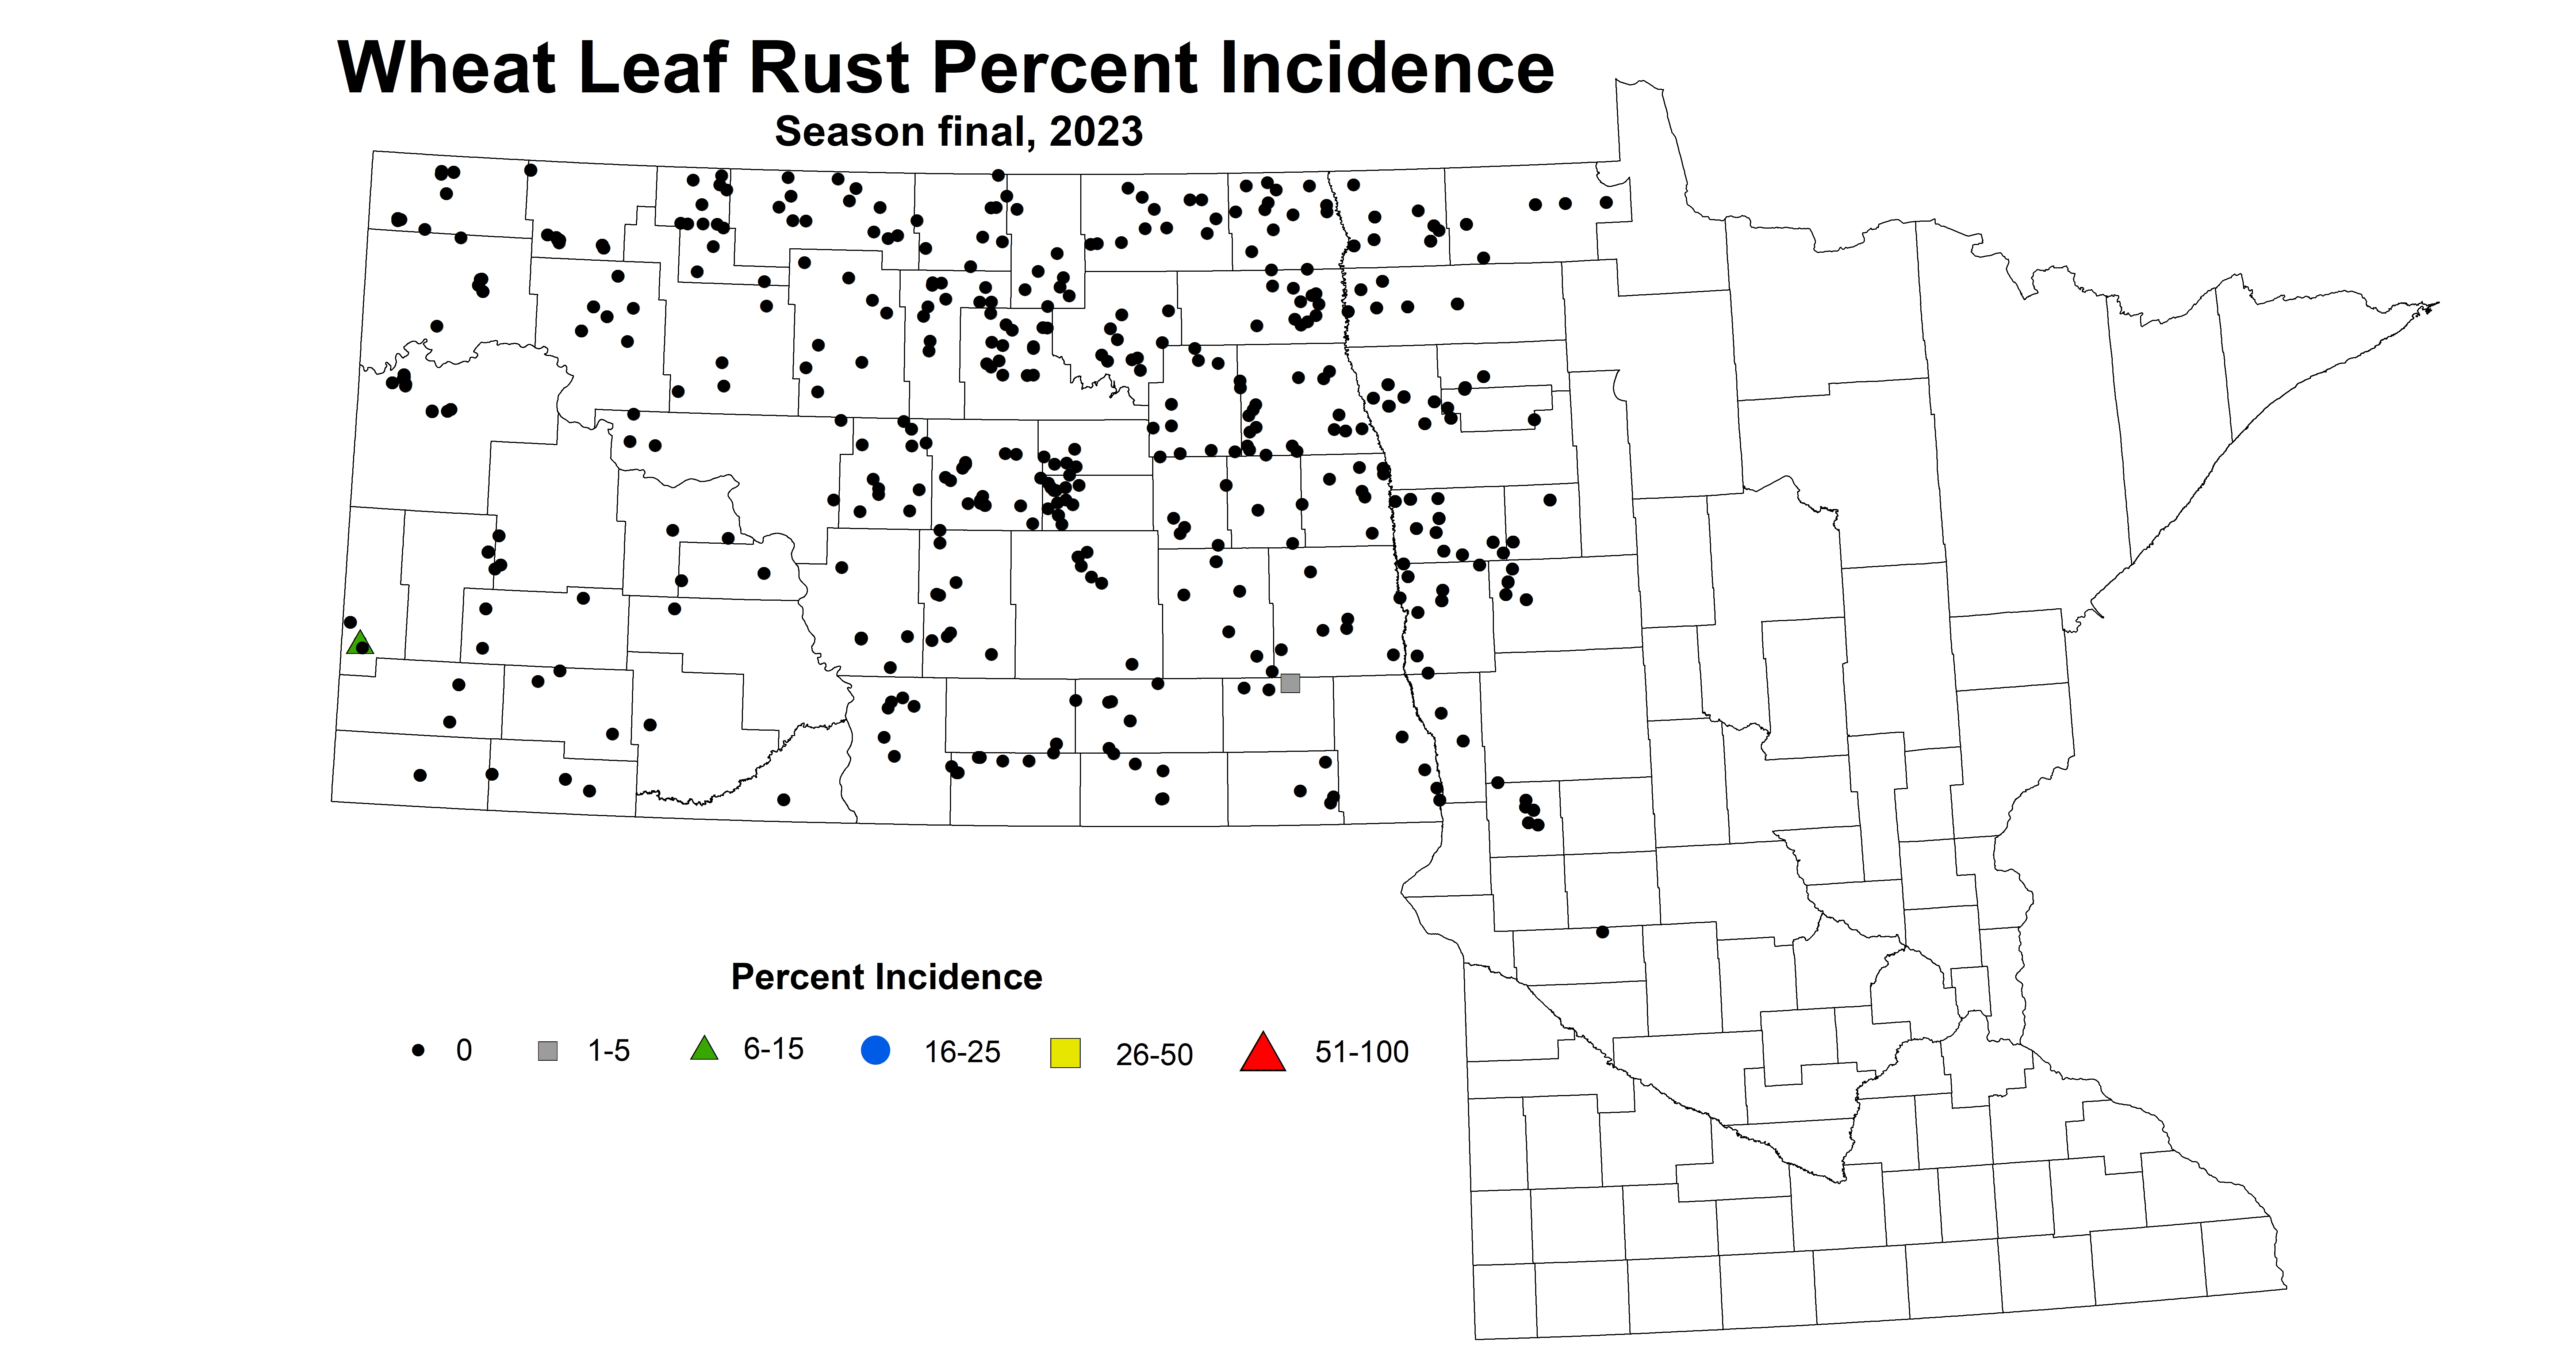 wheat leaf rust incidence season final 2023